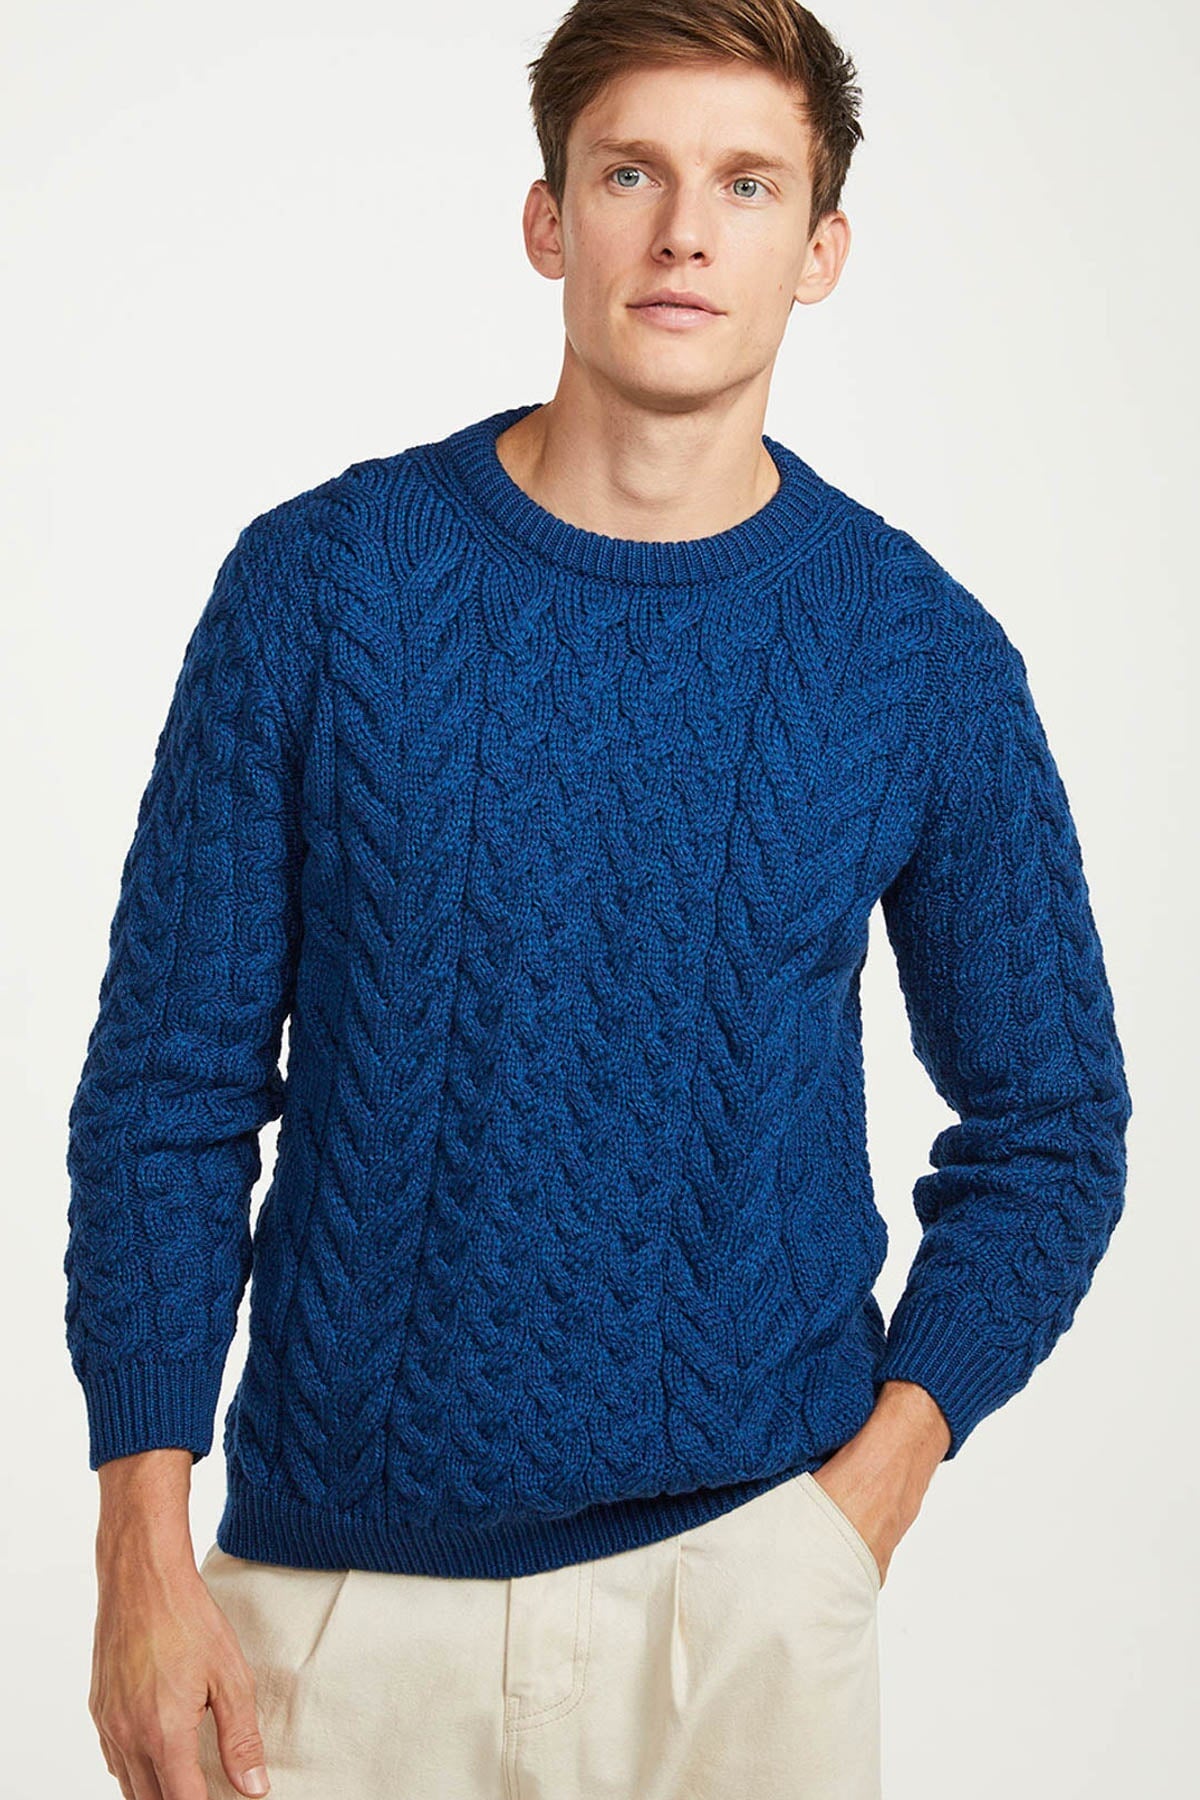 Men's Crew Neck Sweater in Blue - Aran Woolen Mills | Carraig Donn